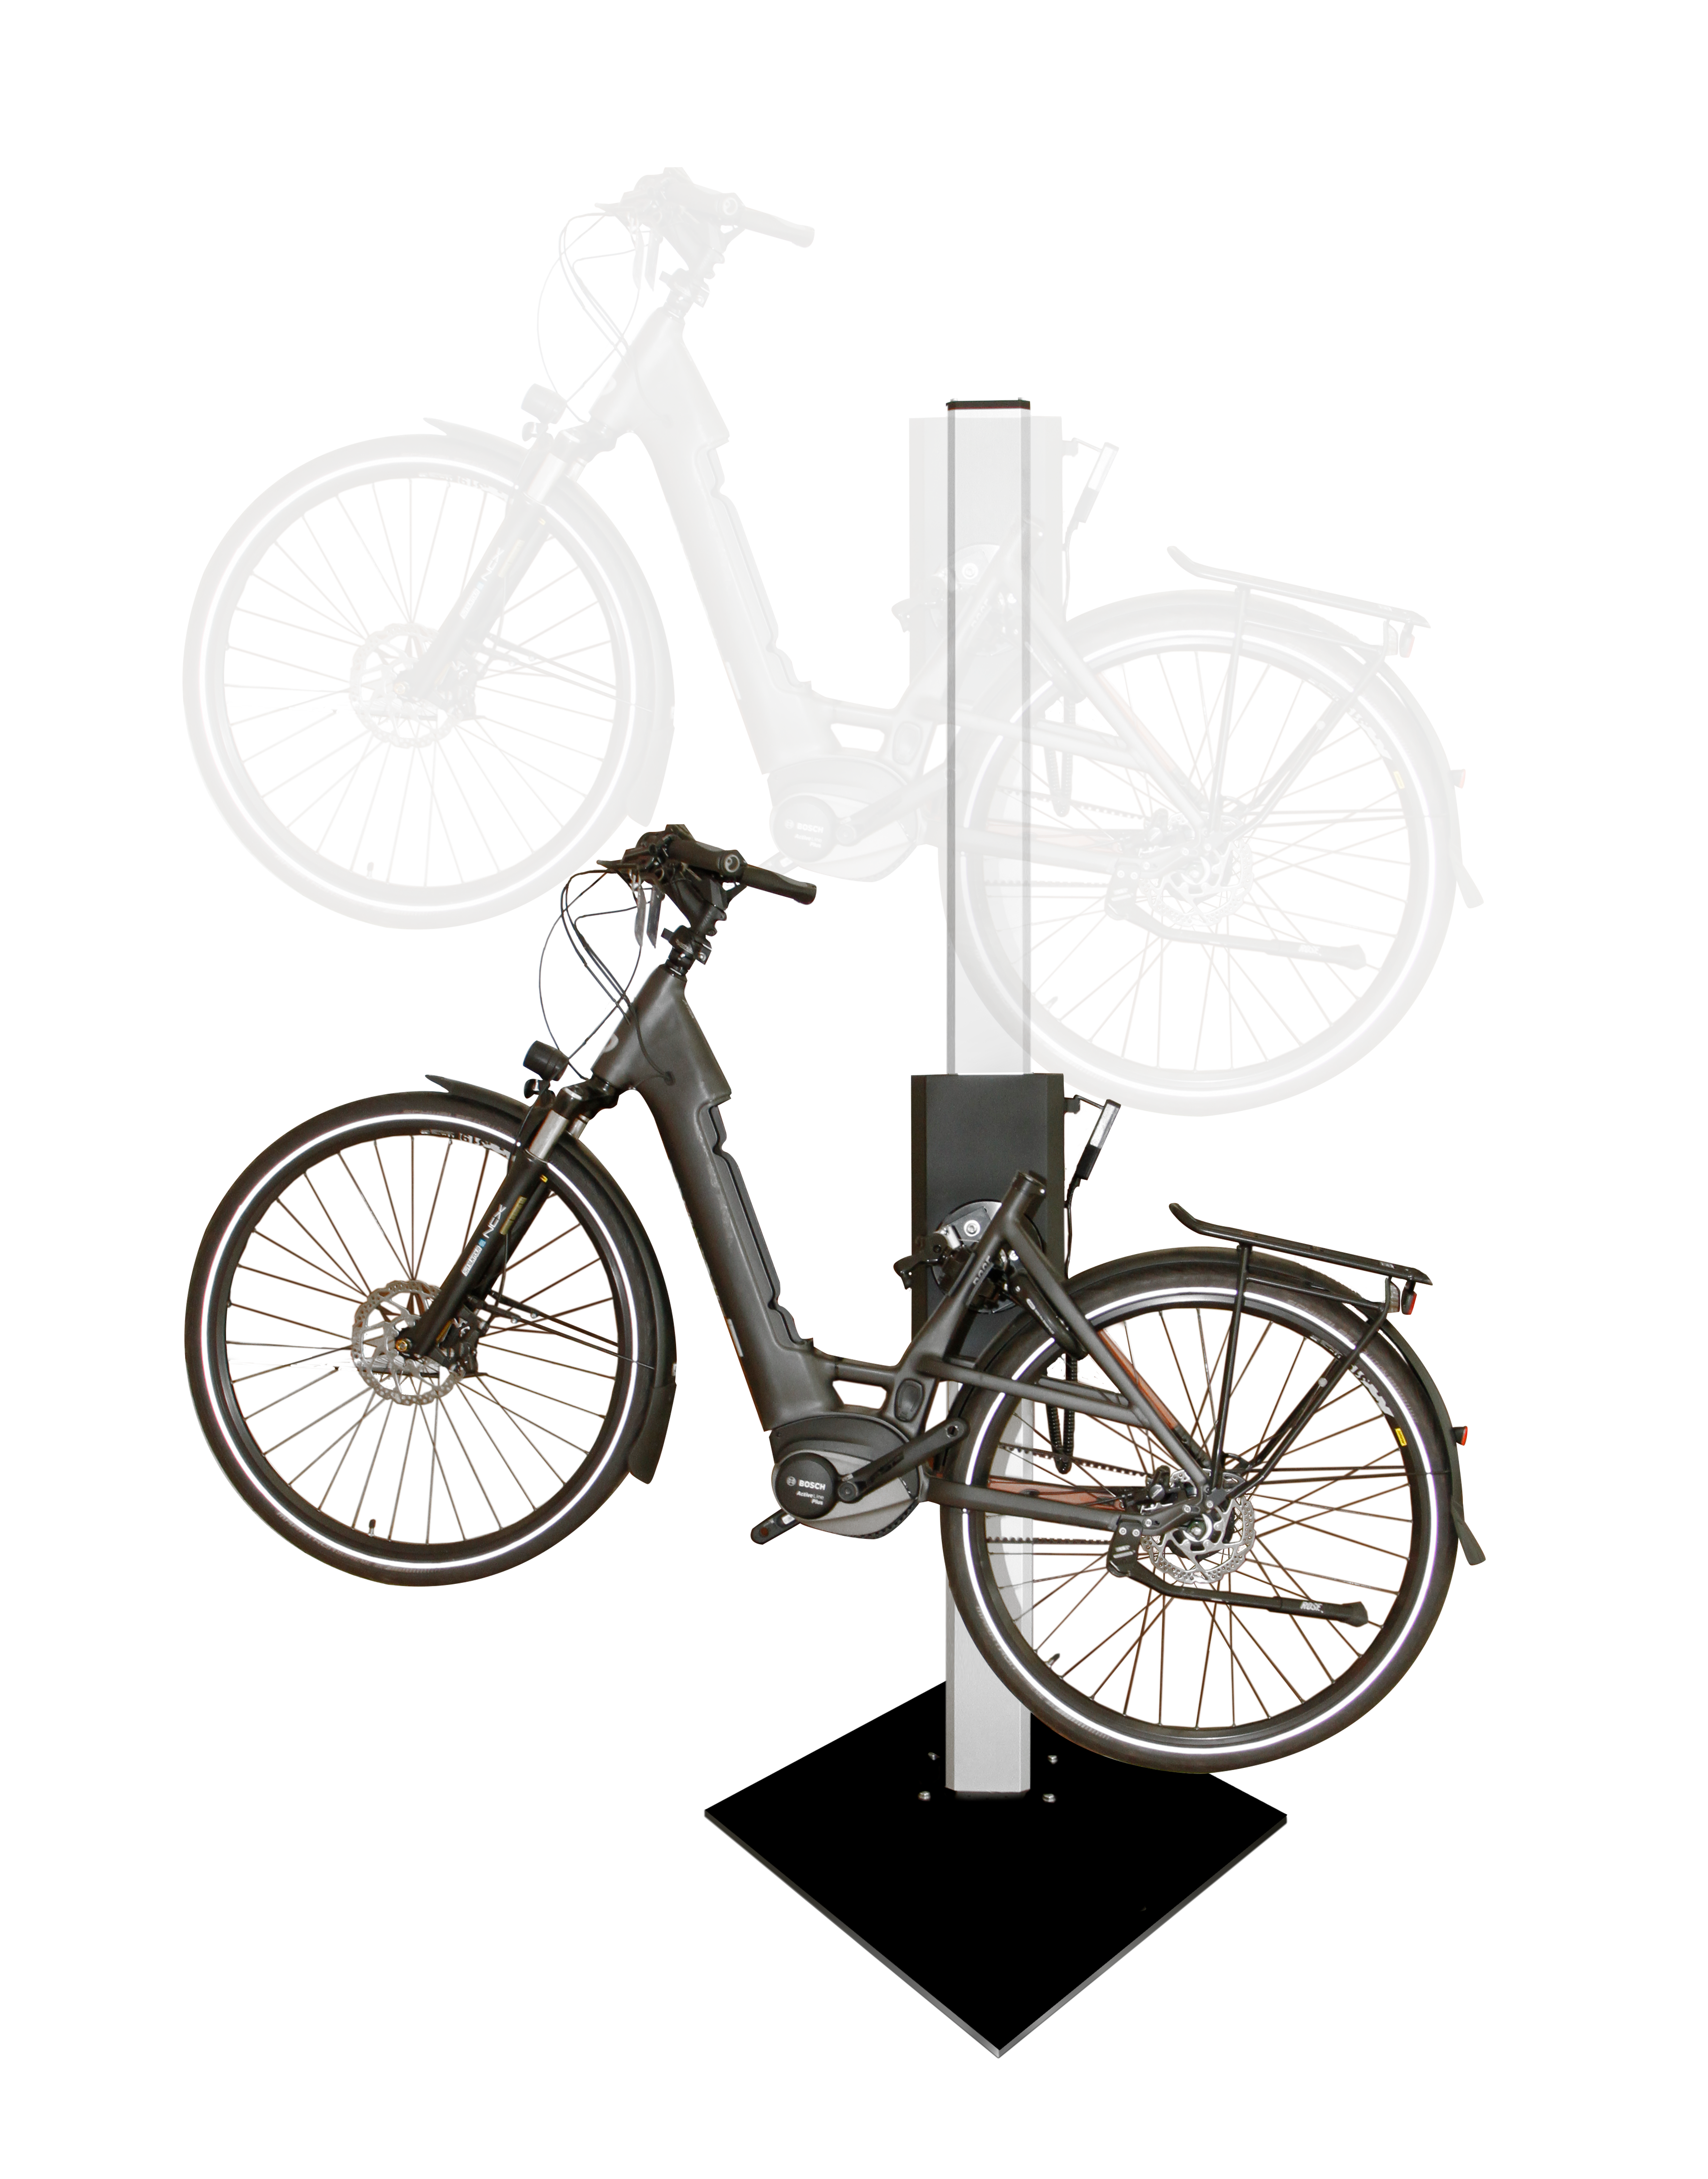 Roemheld Moduhub BikeStand for bike assembly and repair